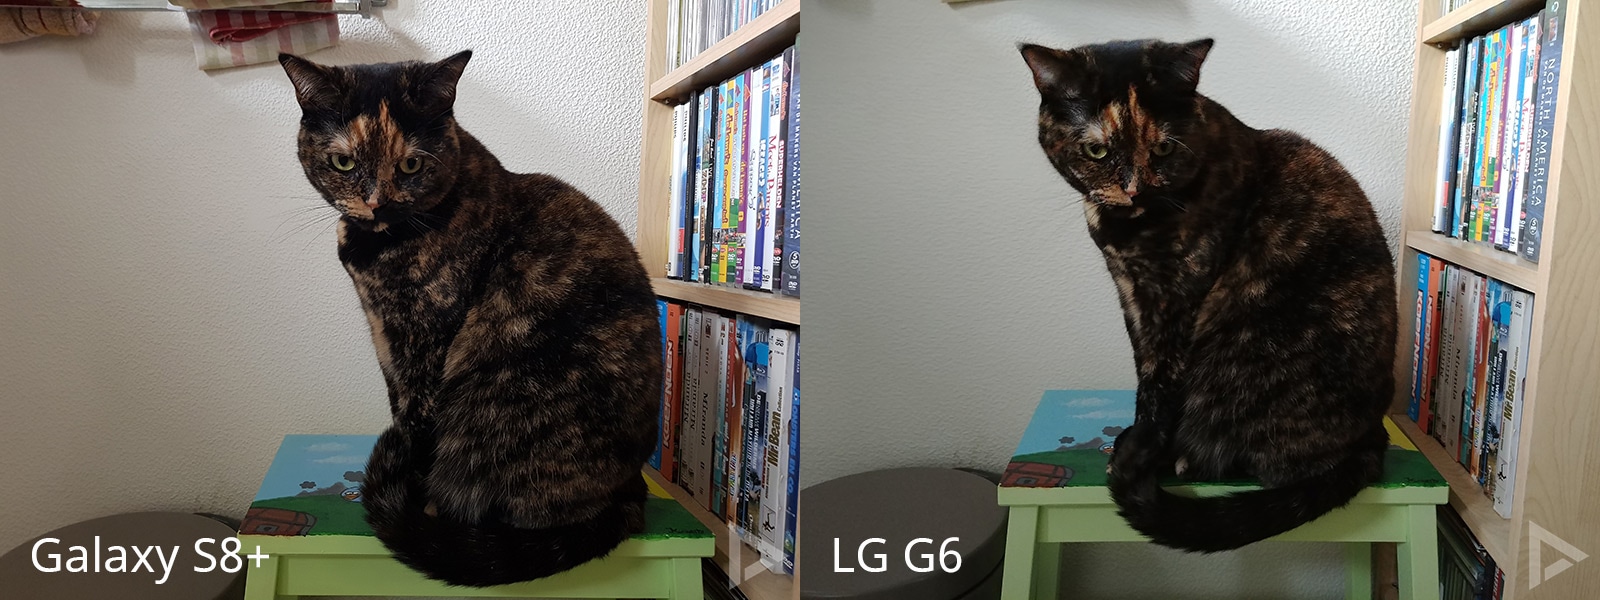 camera Galaxy S8 vs LG G6